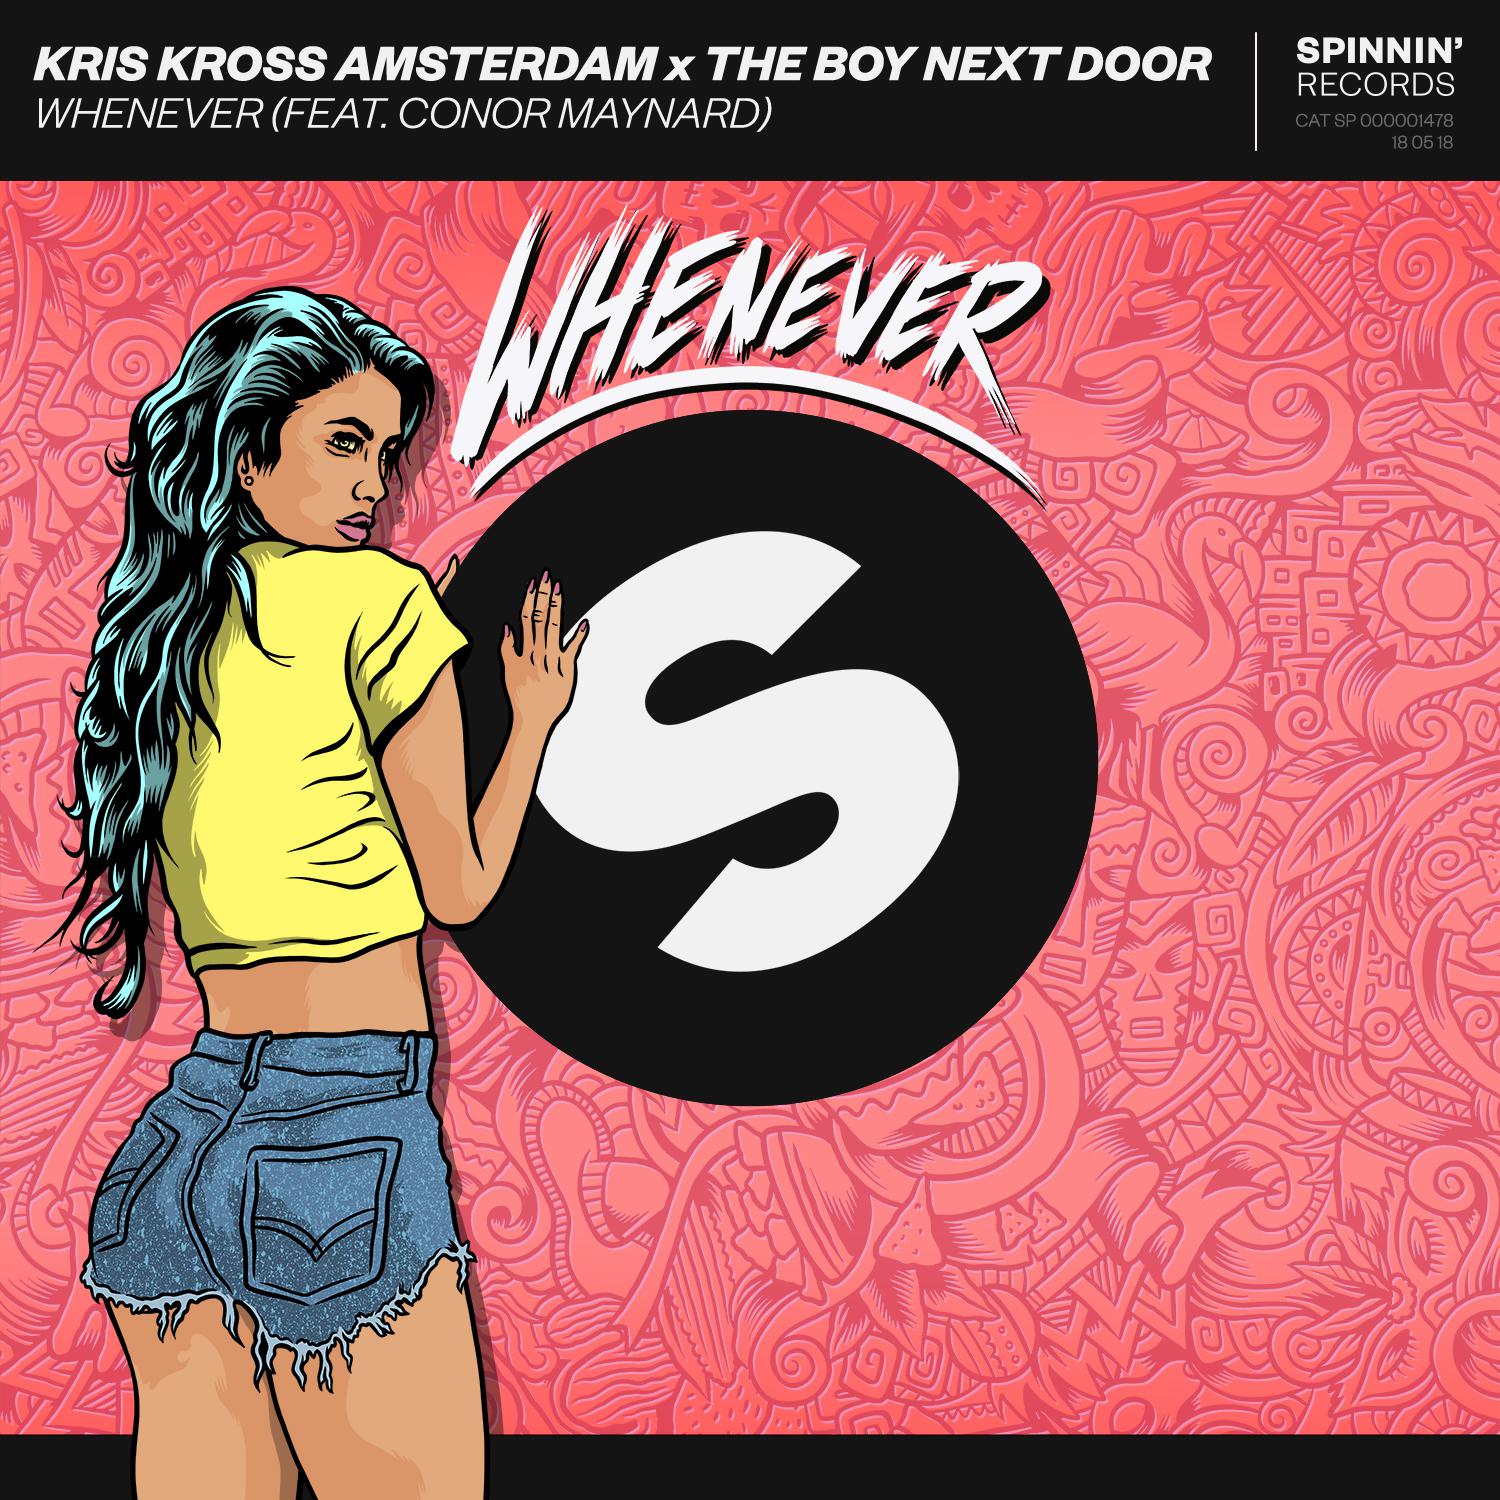 Whenever歌词 歌手Kris Kross Amsterdam / The Boy Next Door / Conor Maynard-专辑Whenever-单曲《Whenever》LRC歌词下载